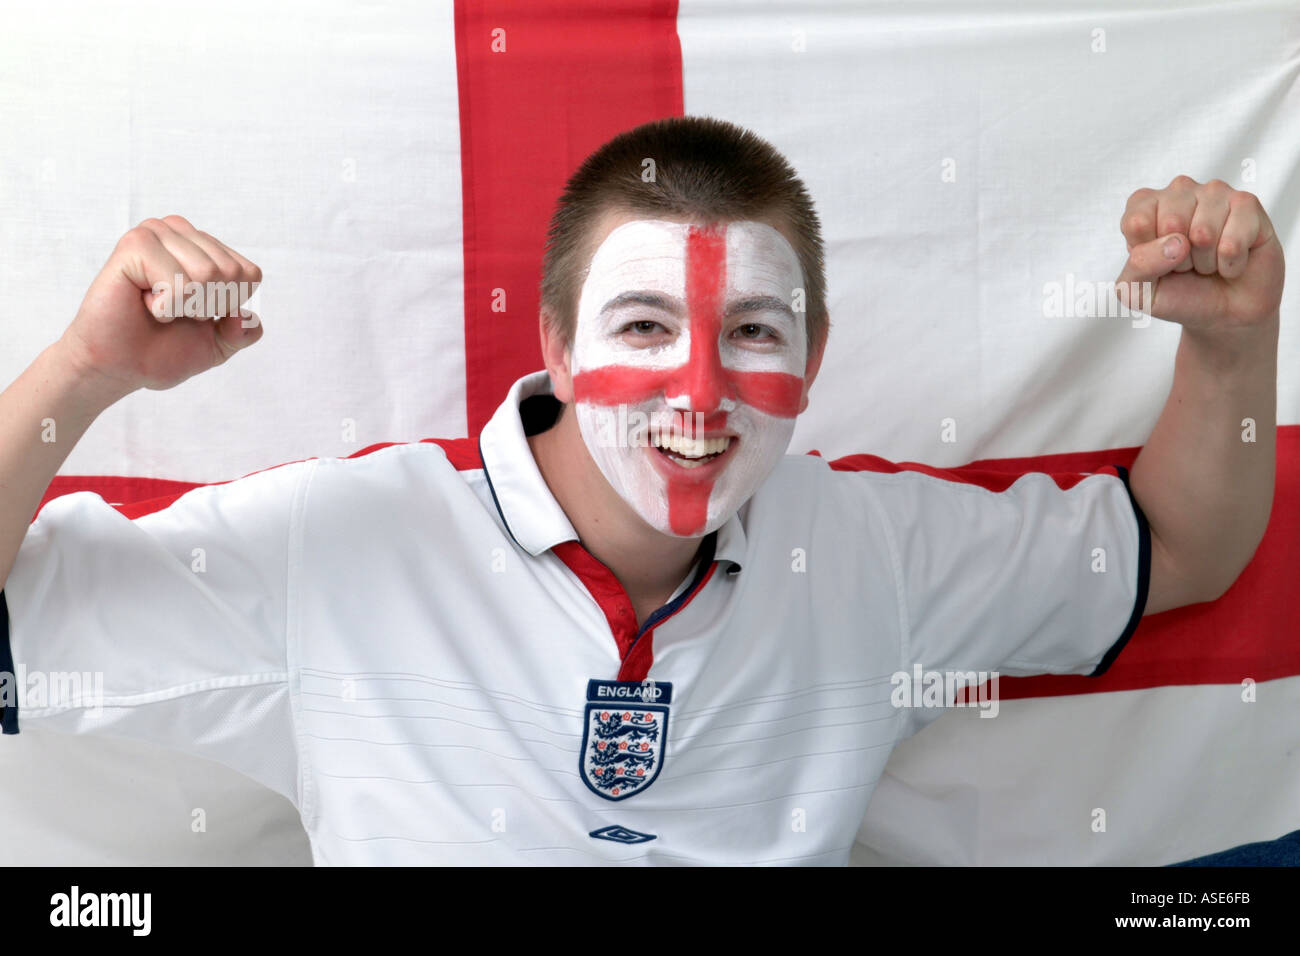 England Fußball-Fans 02 Stockfoto